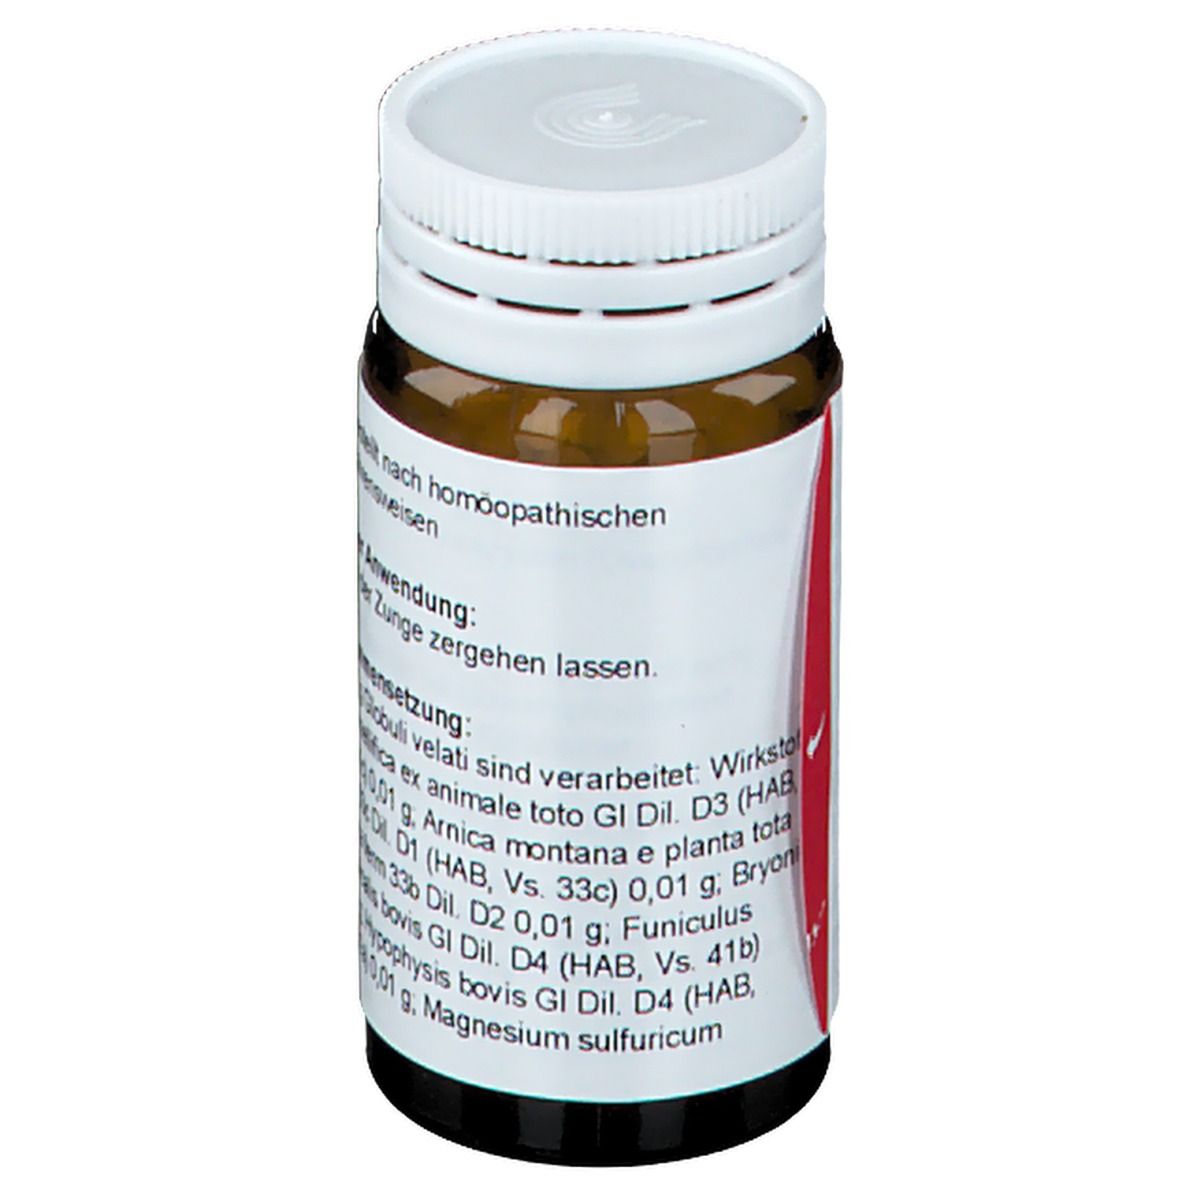 WALA® Magnesium SULFURICUM/ Ovaria Comp. Globuli